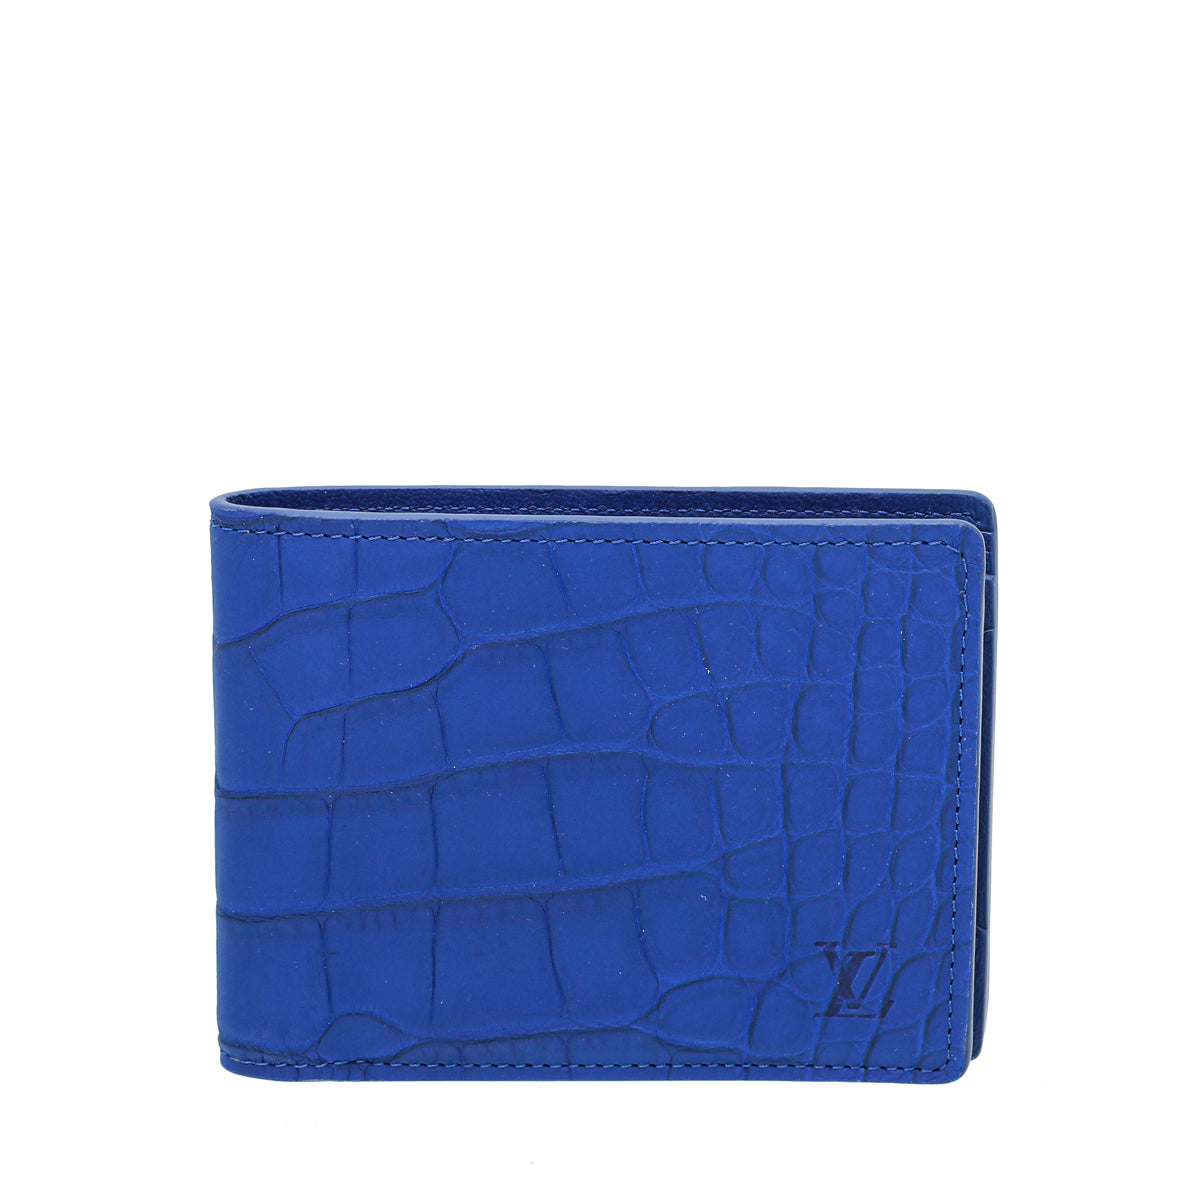 blue lv wallet